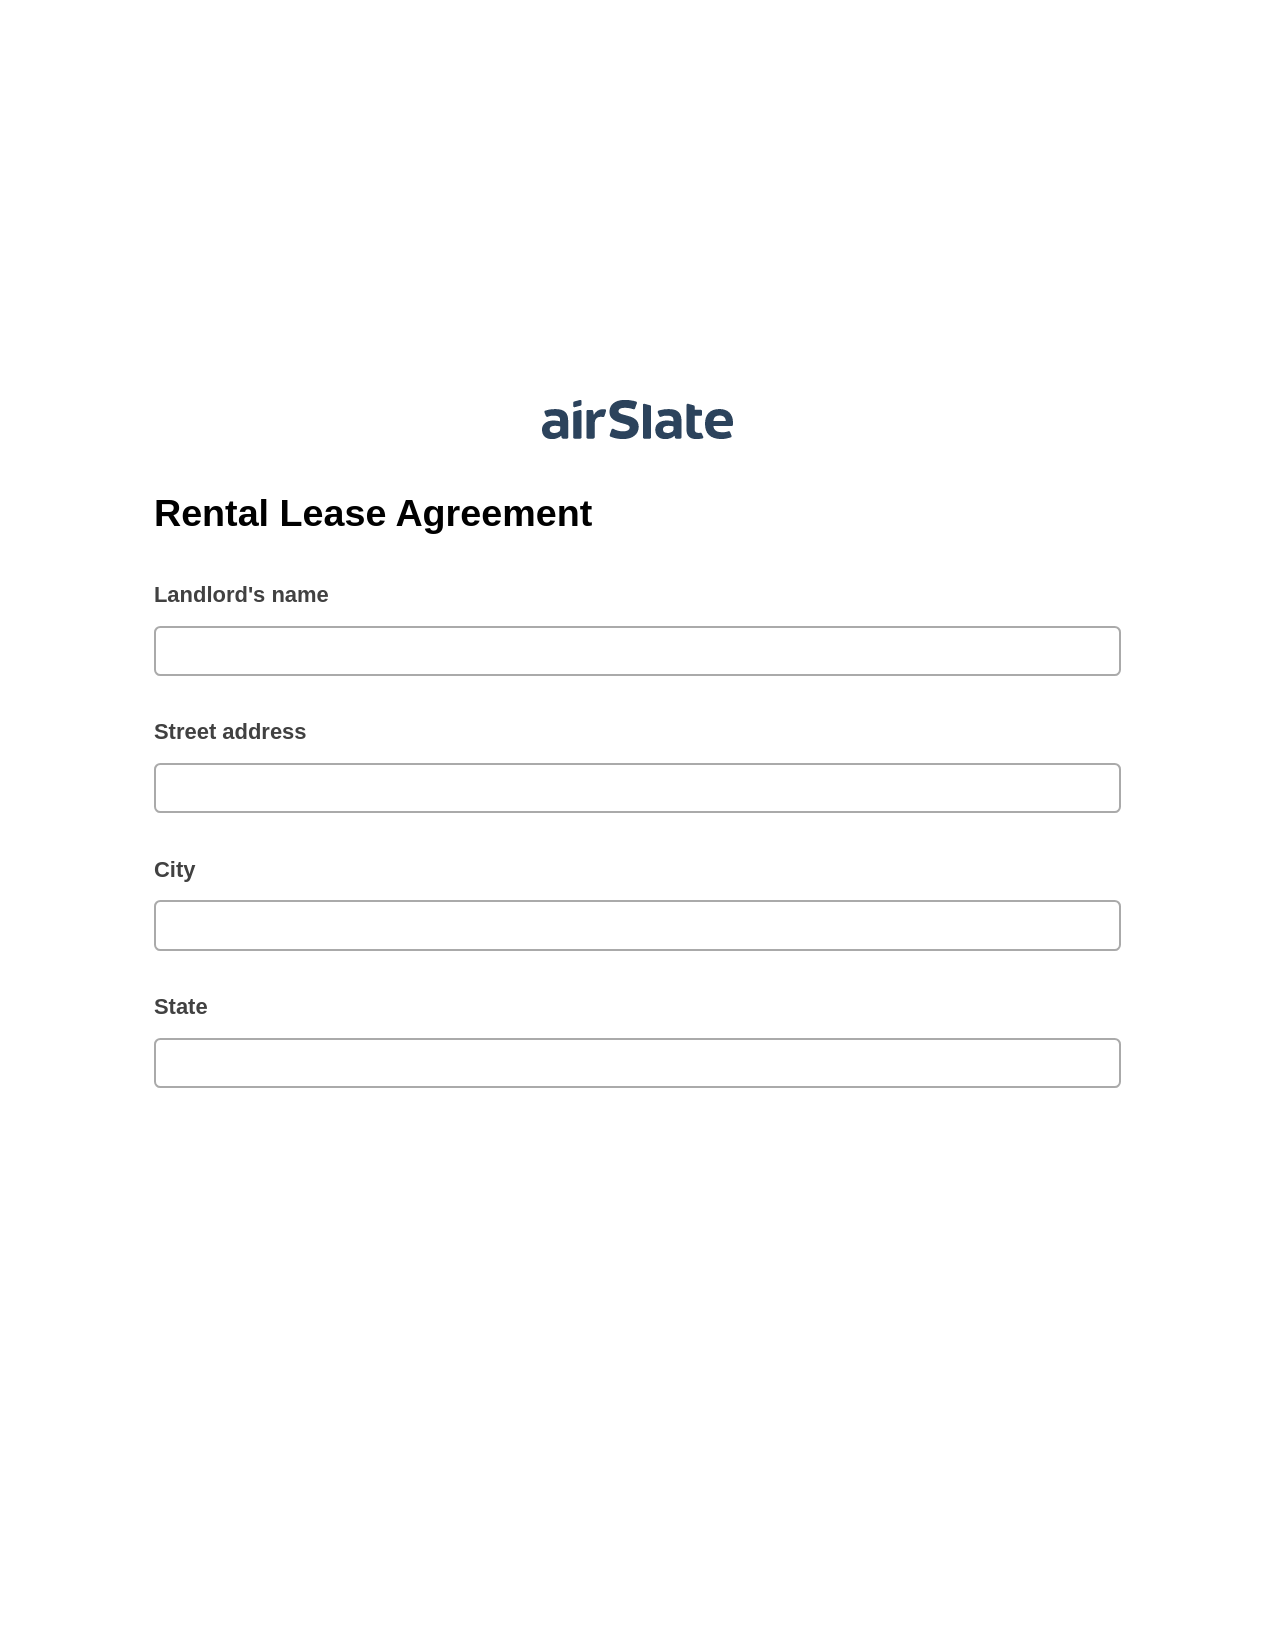 Rental Lease Agreement Pre-fill from Google Sheet Dropdown Options Bot, Invoke Salesforce Process Bot, Export to Google Sheet Bot